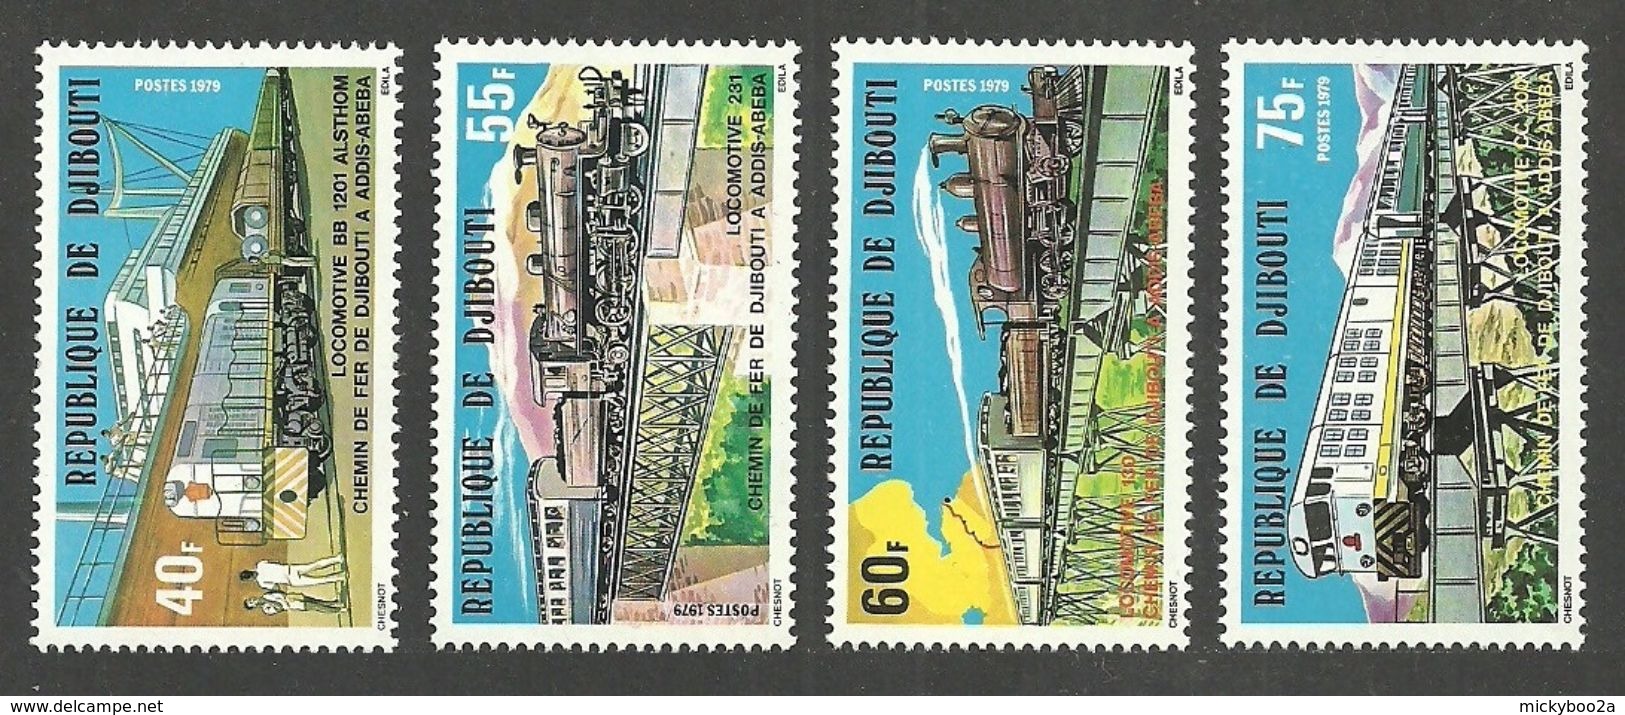 DJIBOUTI 1979 TRAINS RAILWAYS SHIPS BRIDGES ADDIS ABABA RAILWAY SET MNH - Djibouti (1977-...)